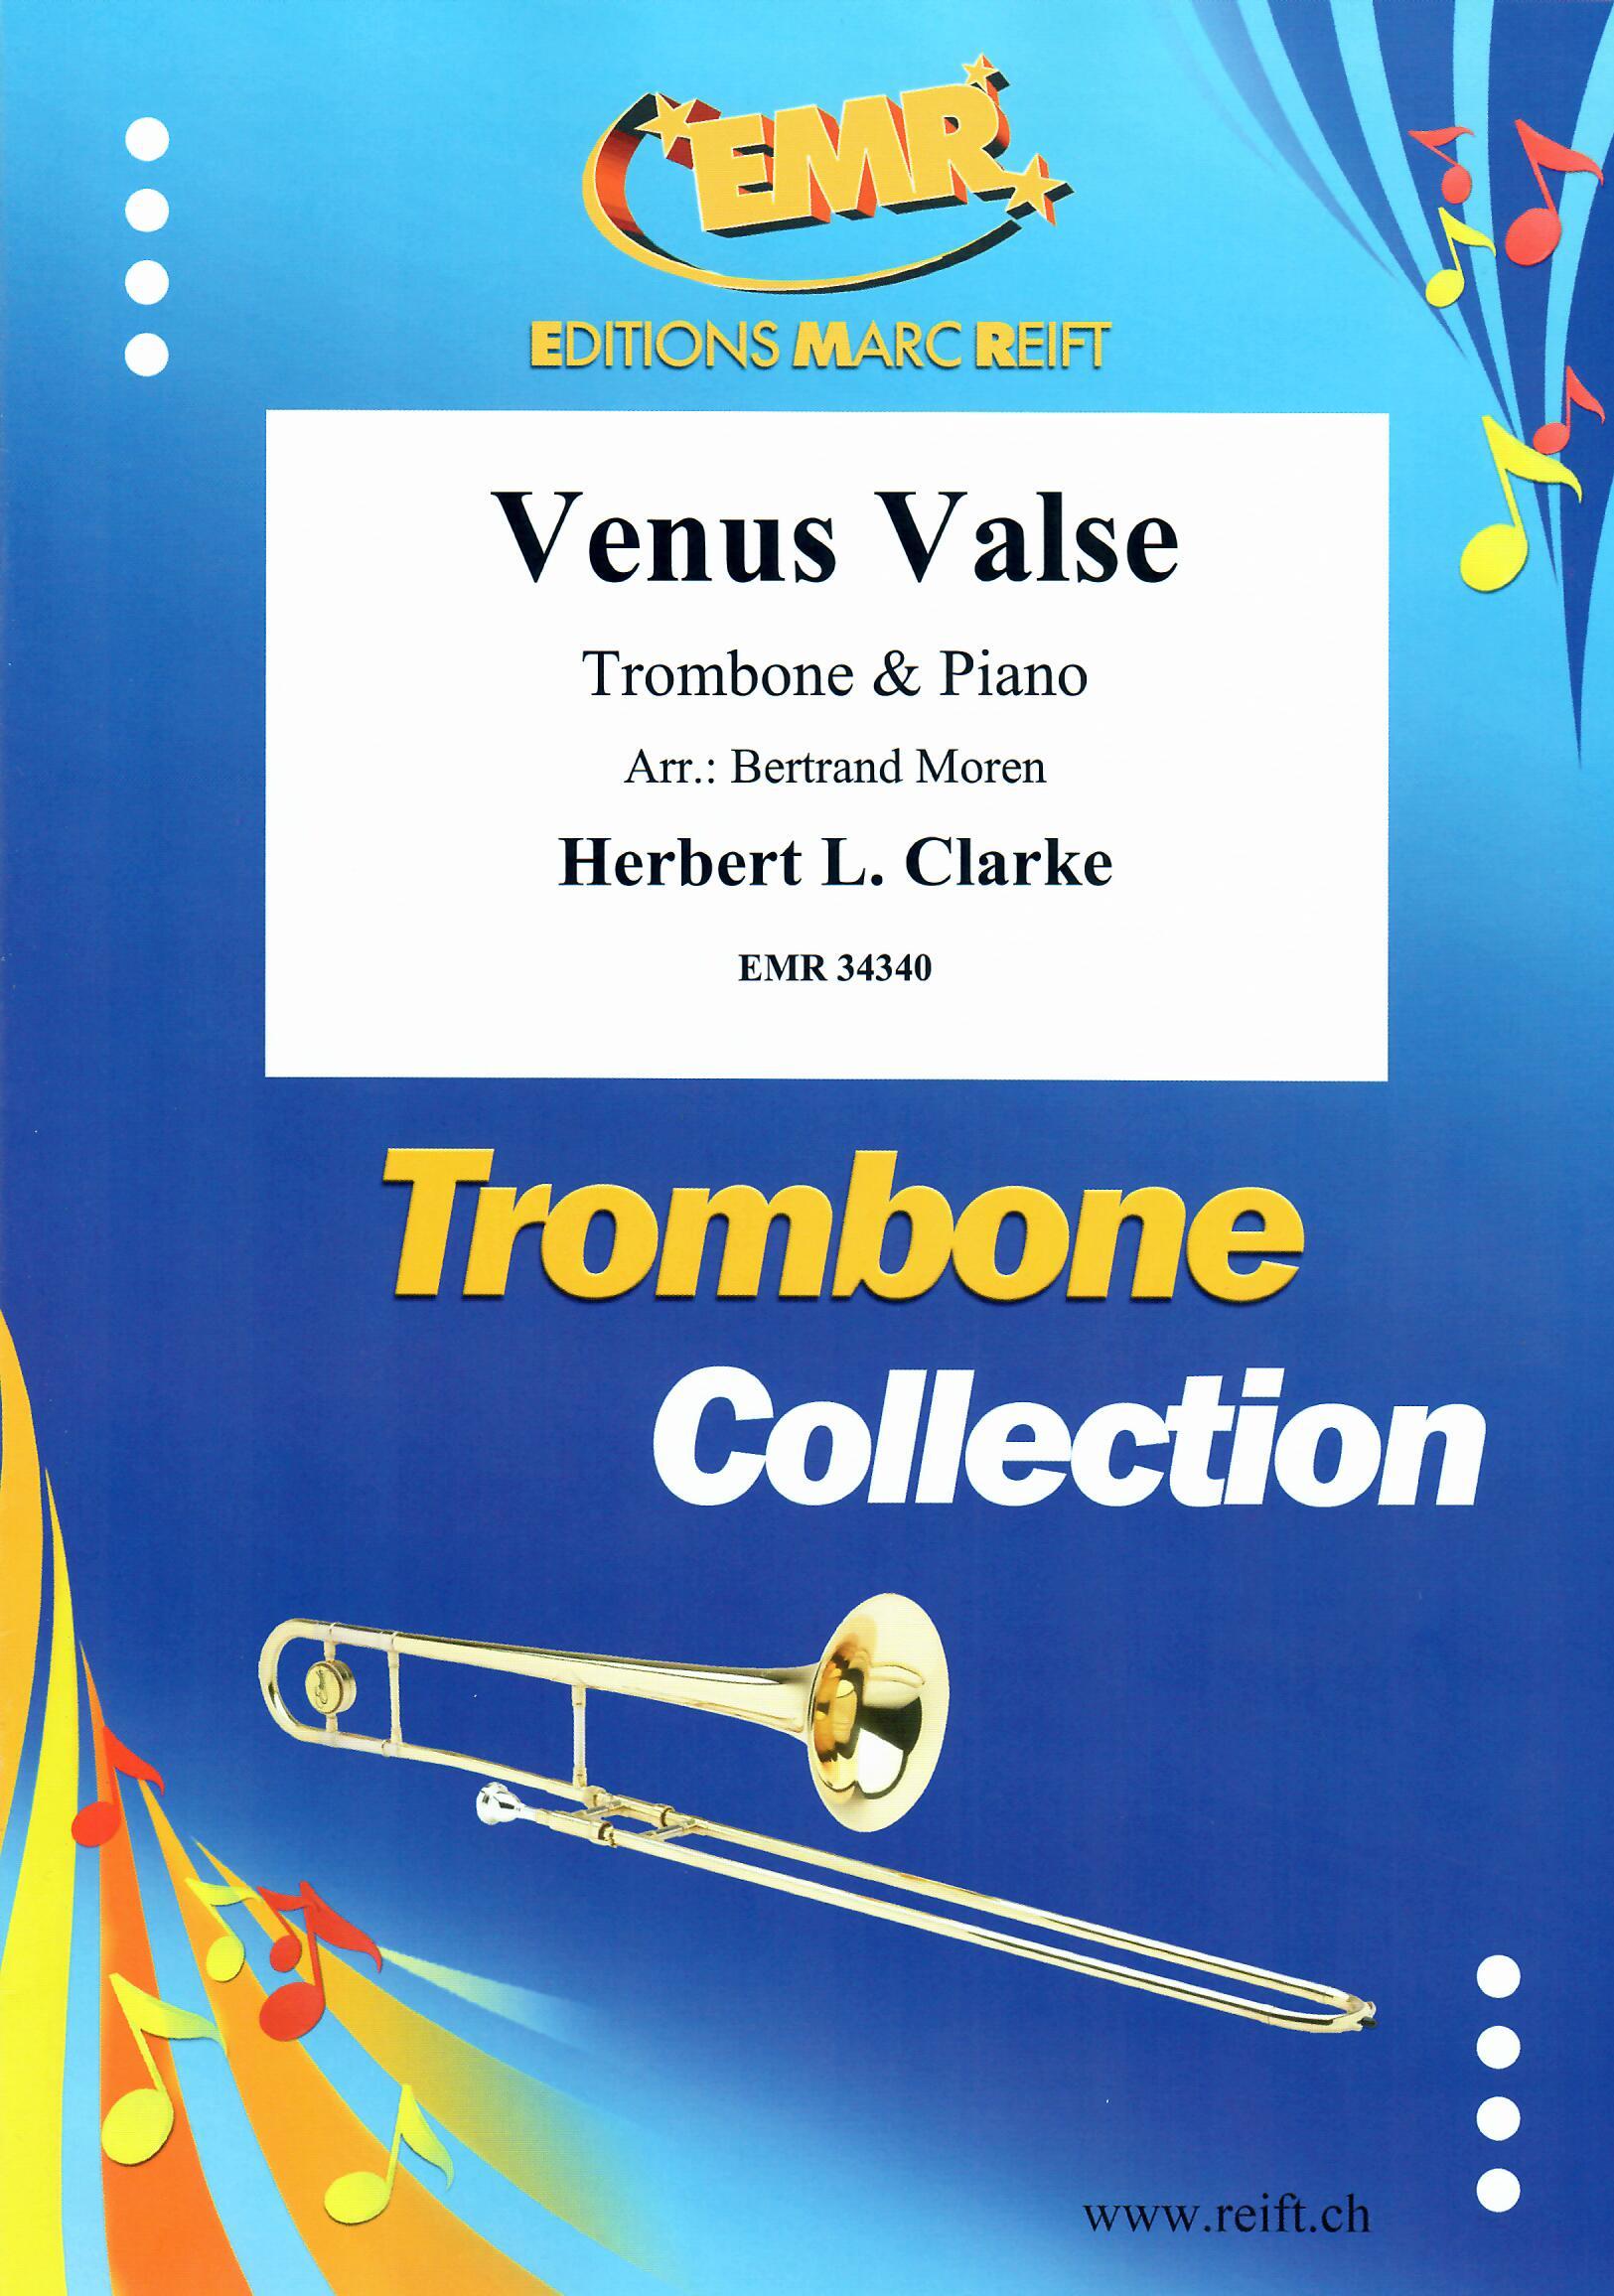 VENUS VALSE, SOLOS - Trombone